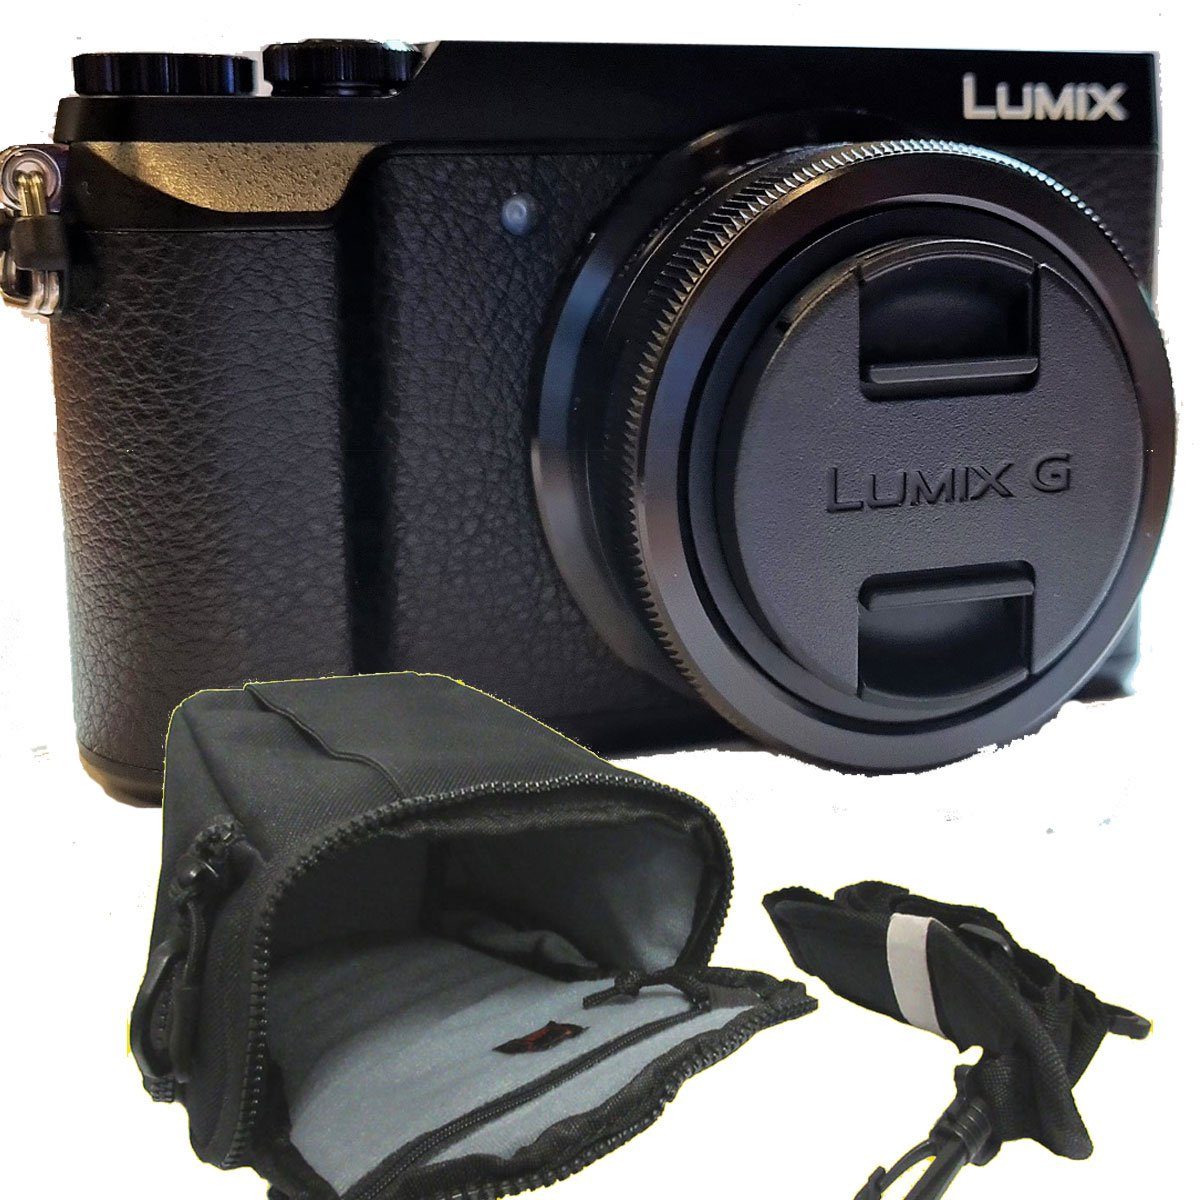 GX80+3,5-5,6/12-32 Panasonic mm Set Kompaktkamera Tasche Lumix inklusive schwarz Panasonic